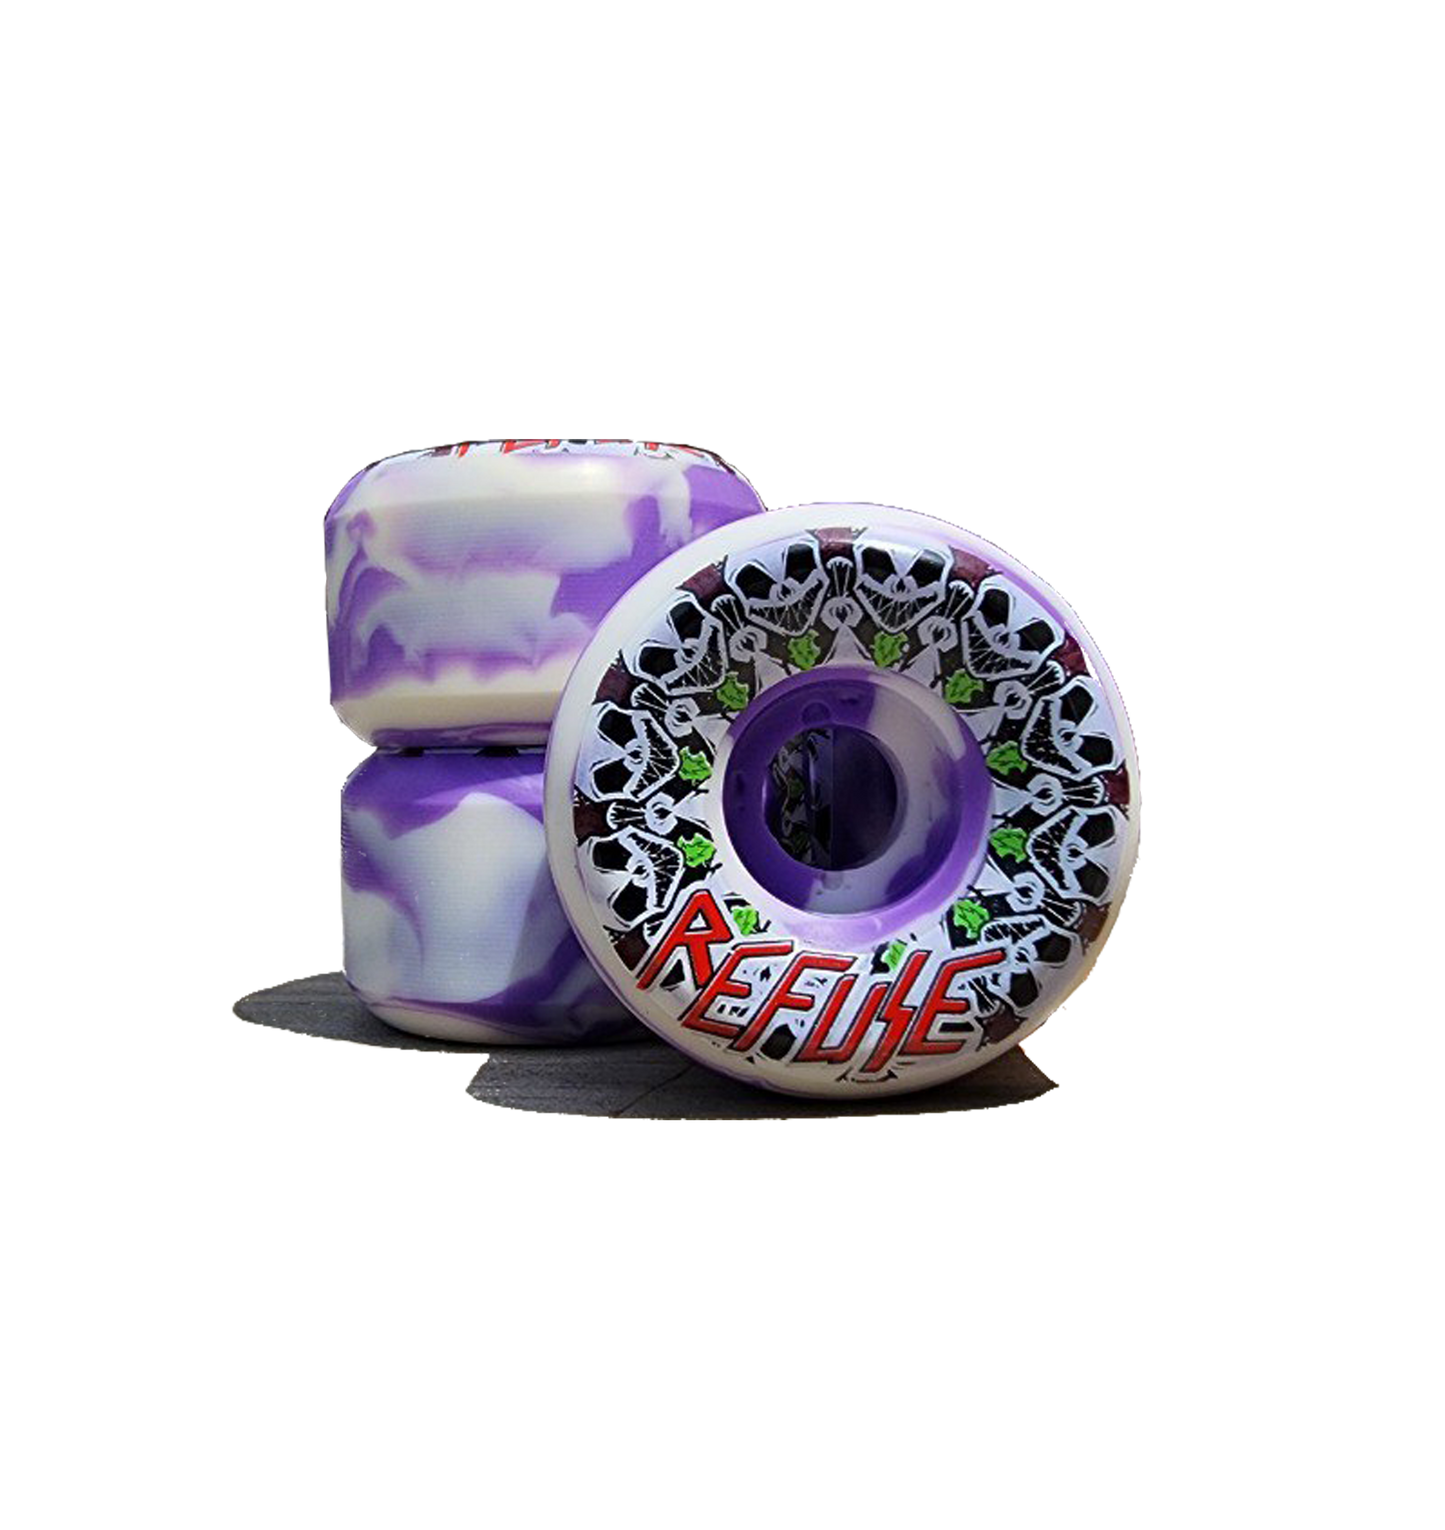 54mm Refuse Wheels - 101a purple & white swirl